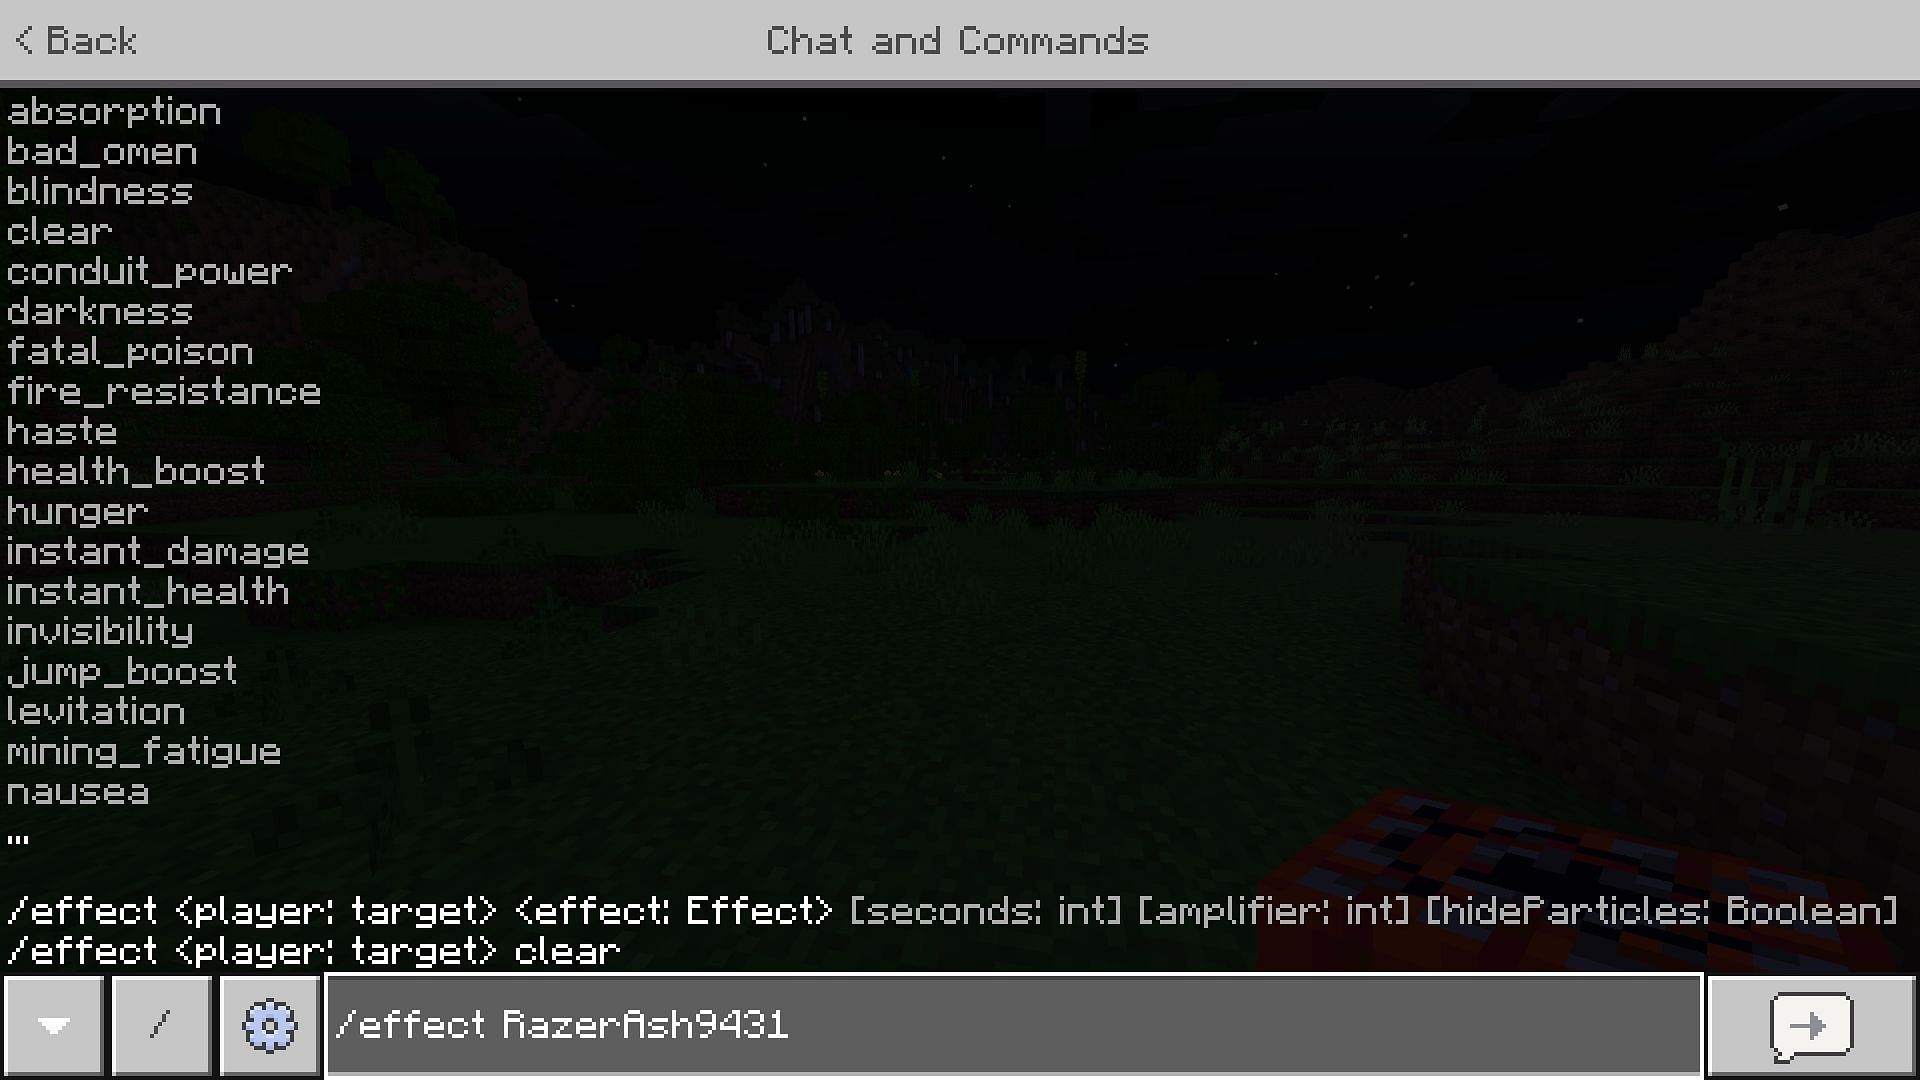 Effect command (Image via Minecraft 1.19 update)